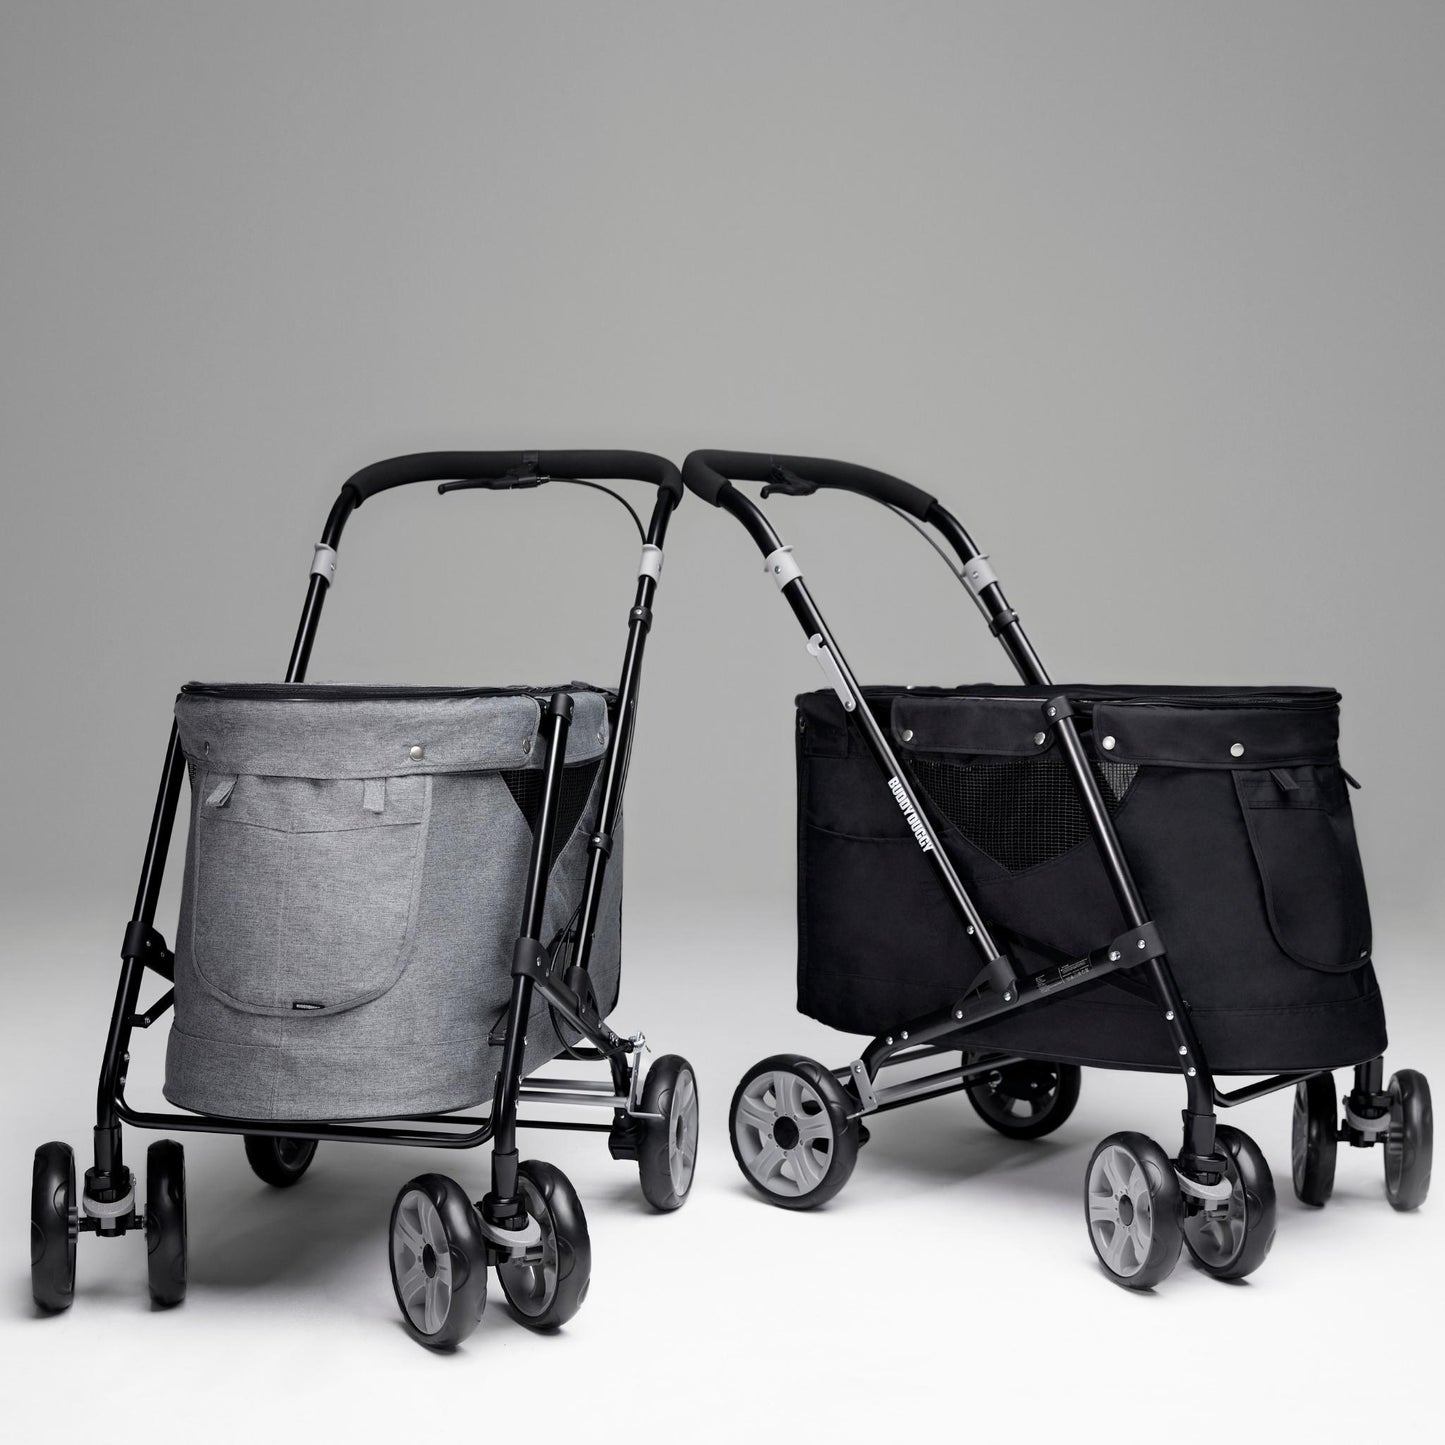 BUDDYDUGGY RIDER COLLY Pet Stroller Wagon